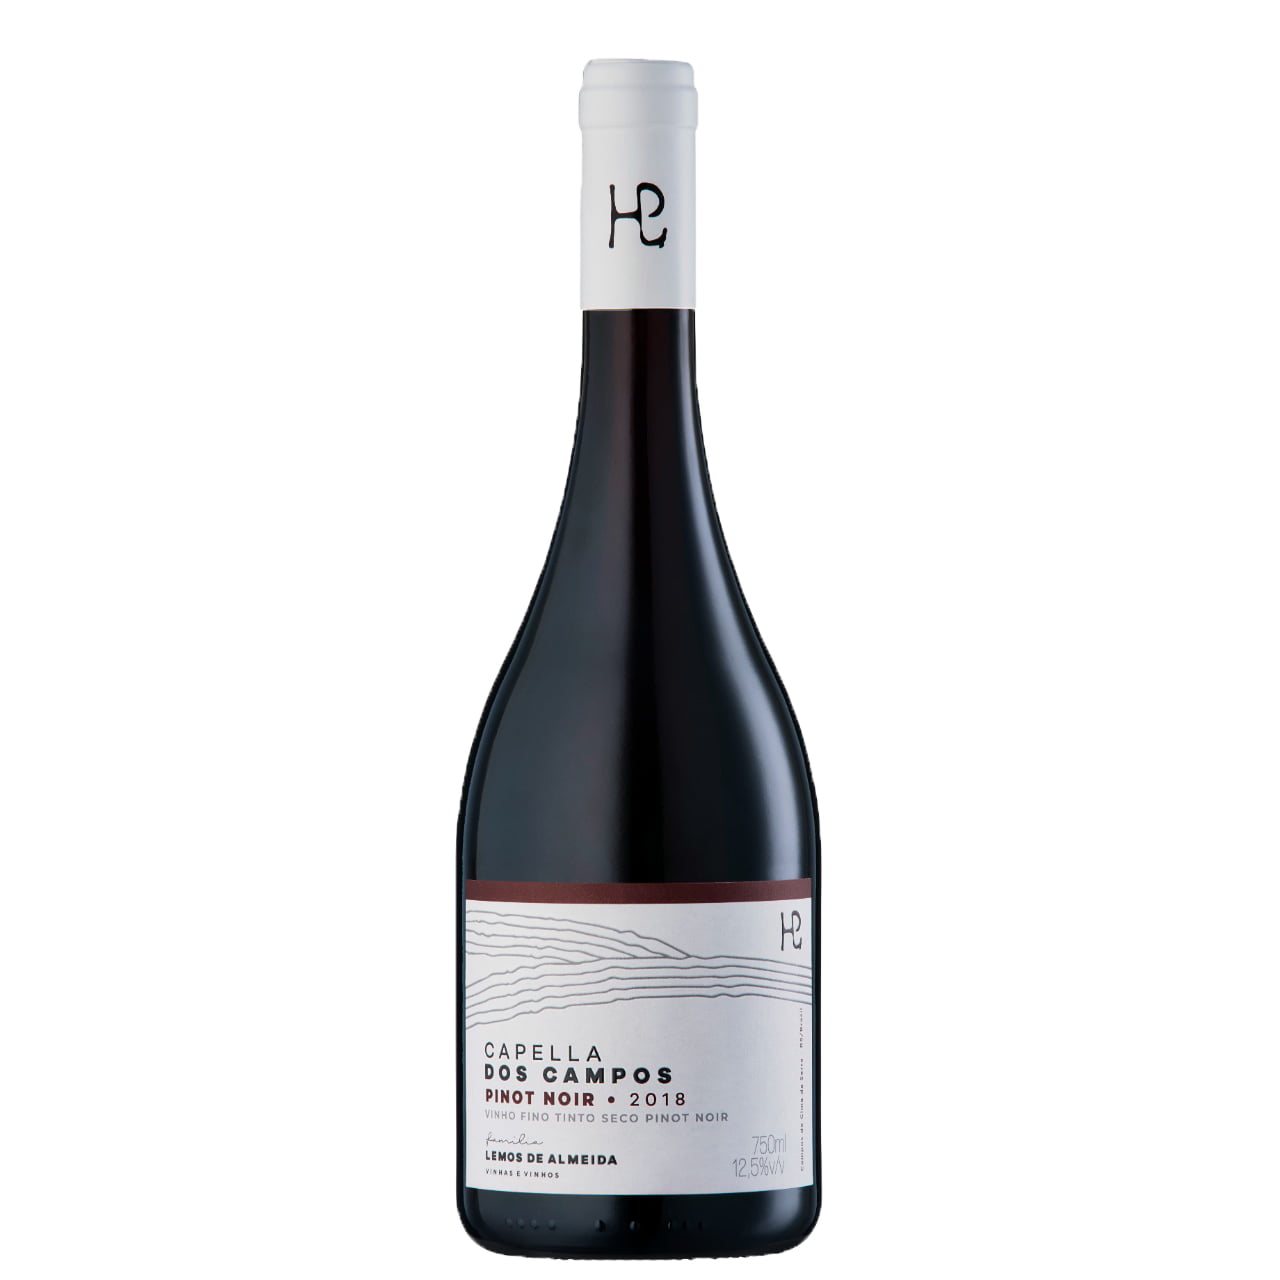 Vinho Capella dos Campos Pinot Noir Tinto Seco 750ml